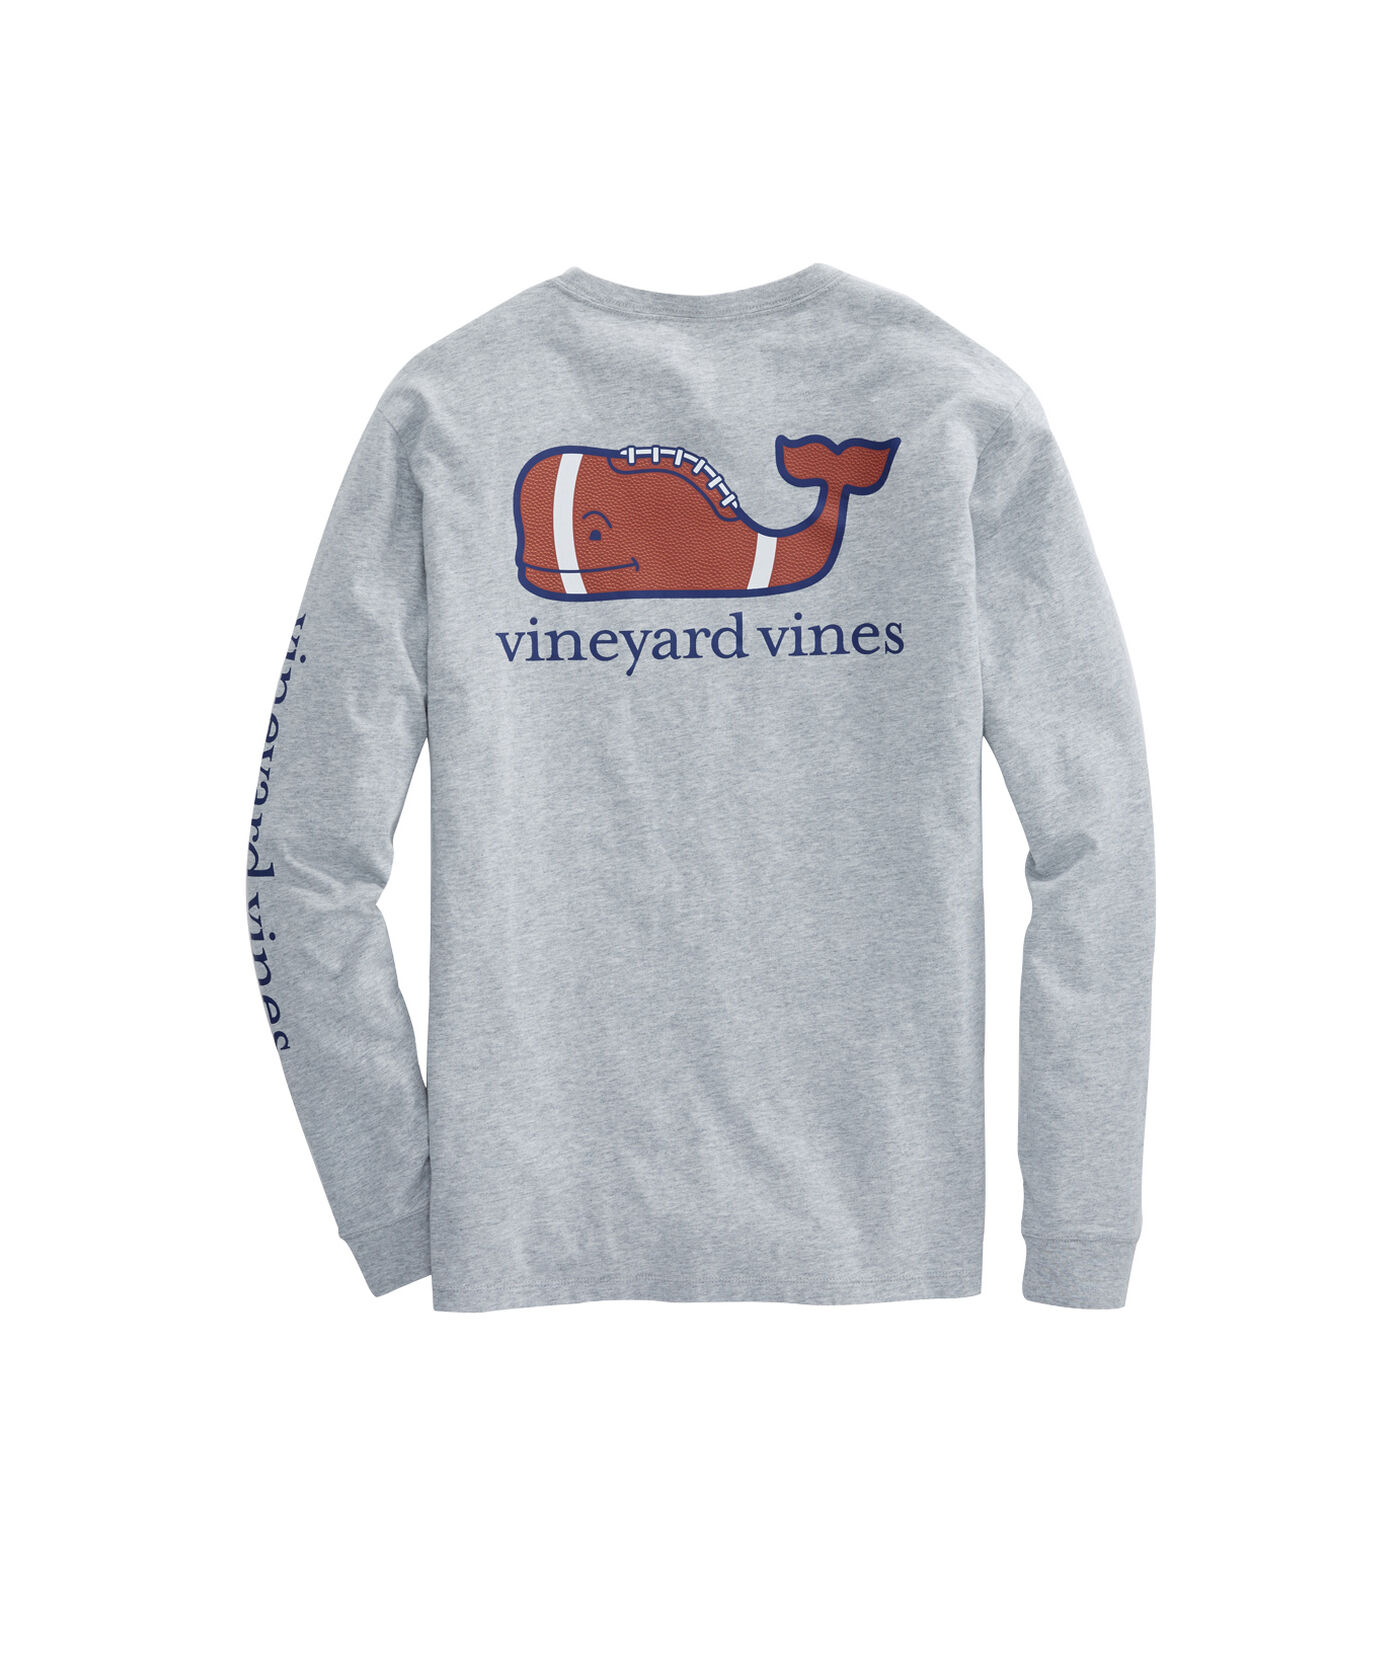 Shop Long-Sleeve Heathered Football Whale Pocket T-Shirt at vineyard vines